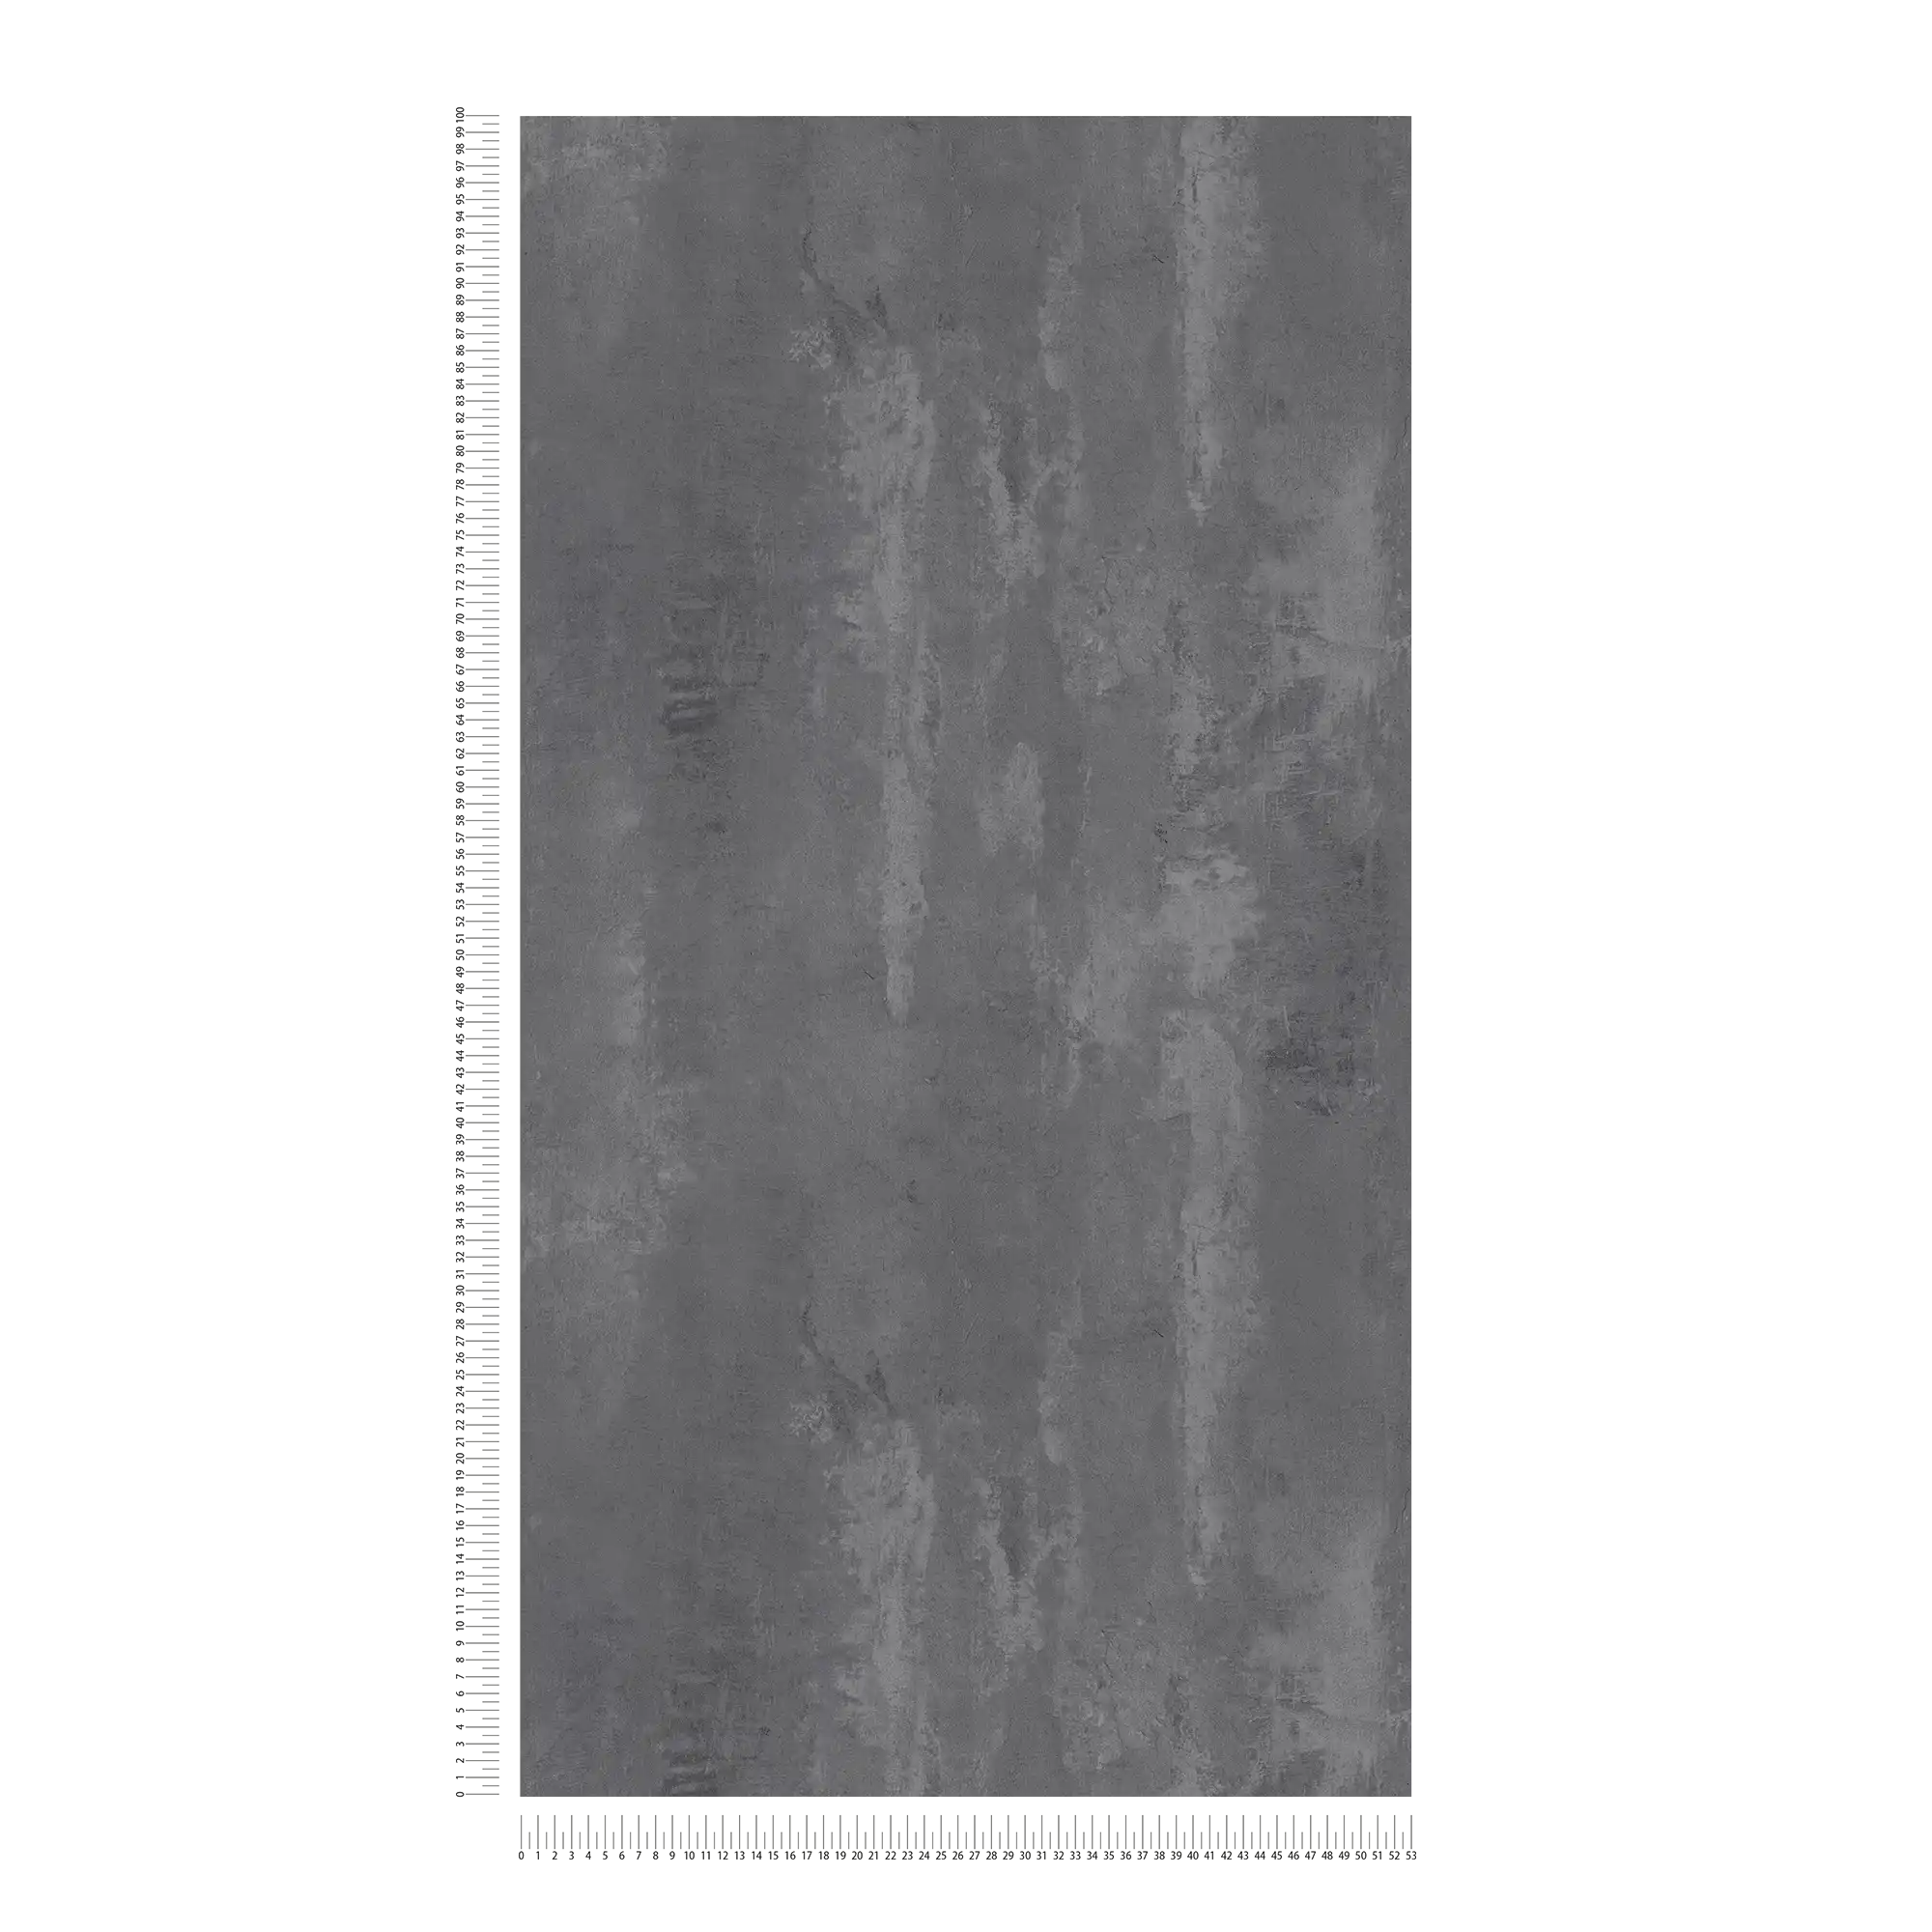             Papel pintado de hormigón oscuro de estilo rústico e industrial - gris
        